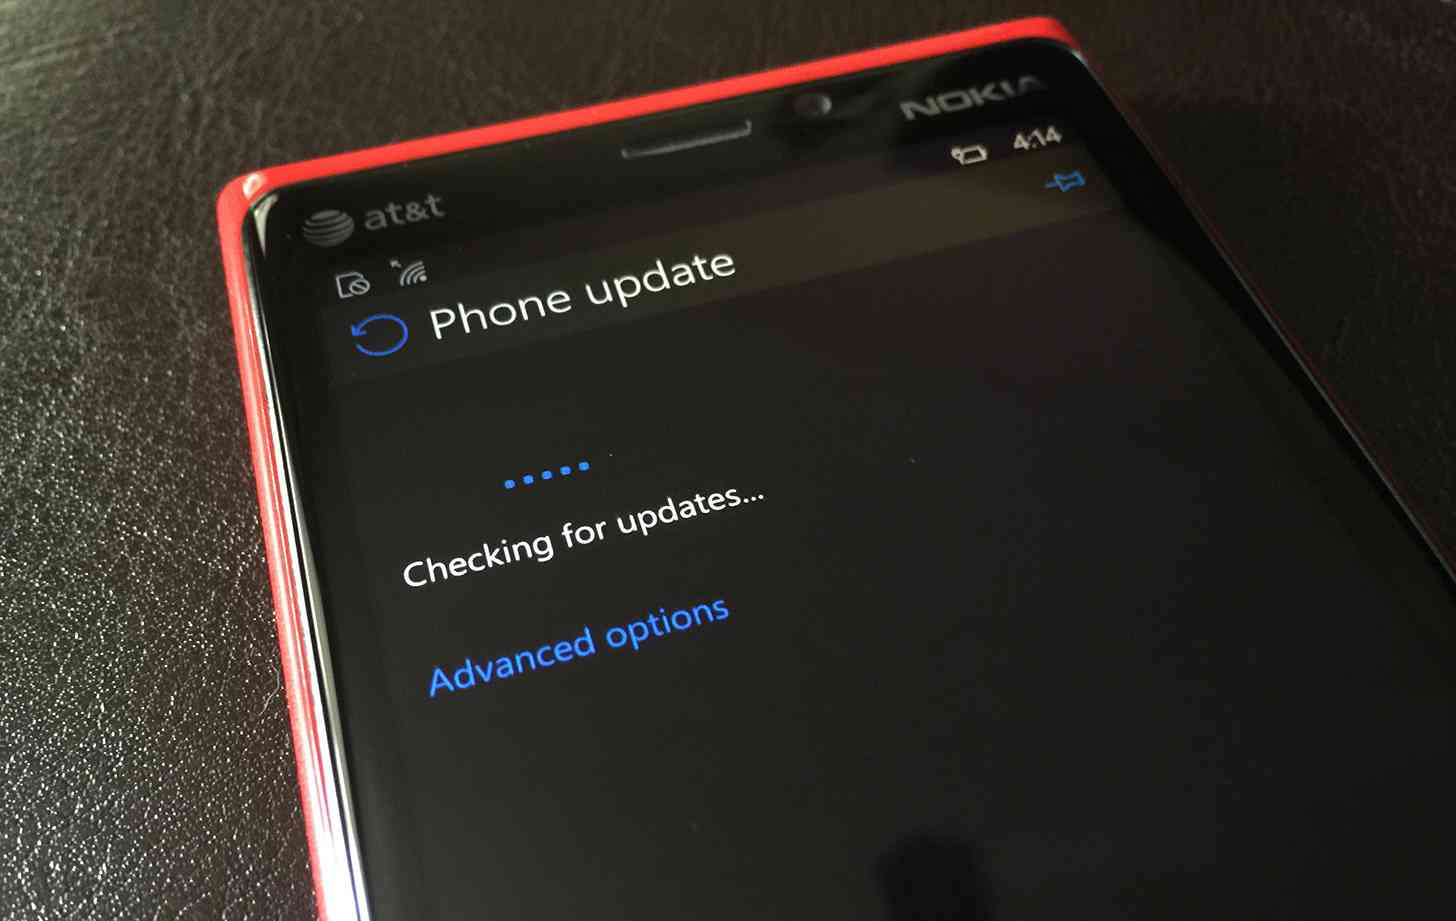 Windows 10 Mobile phone update